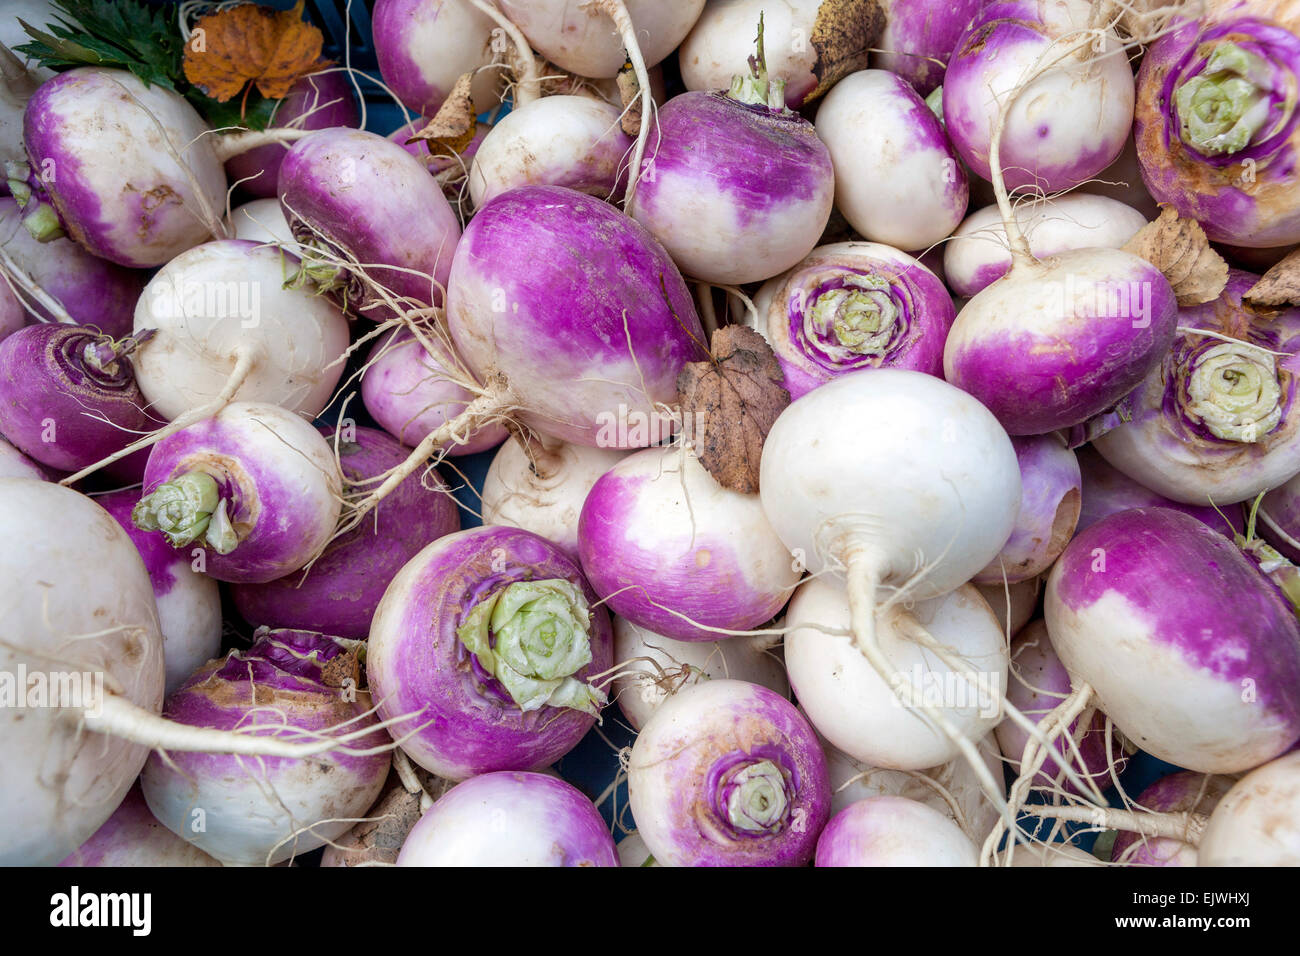 Freshly turnips roots in Local farmers market Turnip Brassica rapa subsp. rapa "Purple Top" Stock Photo